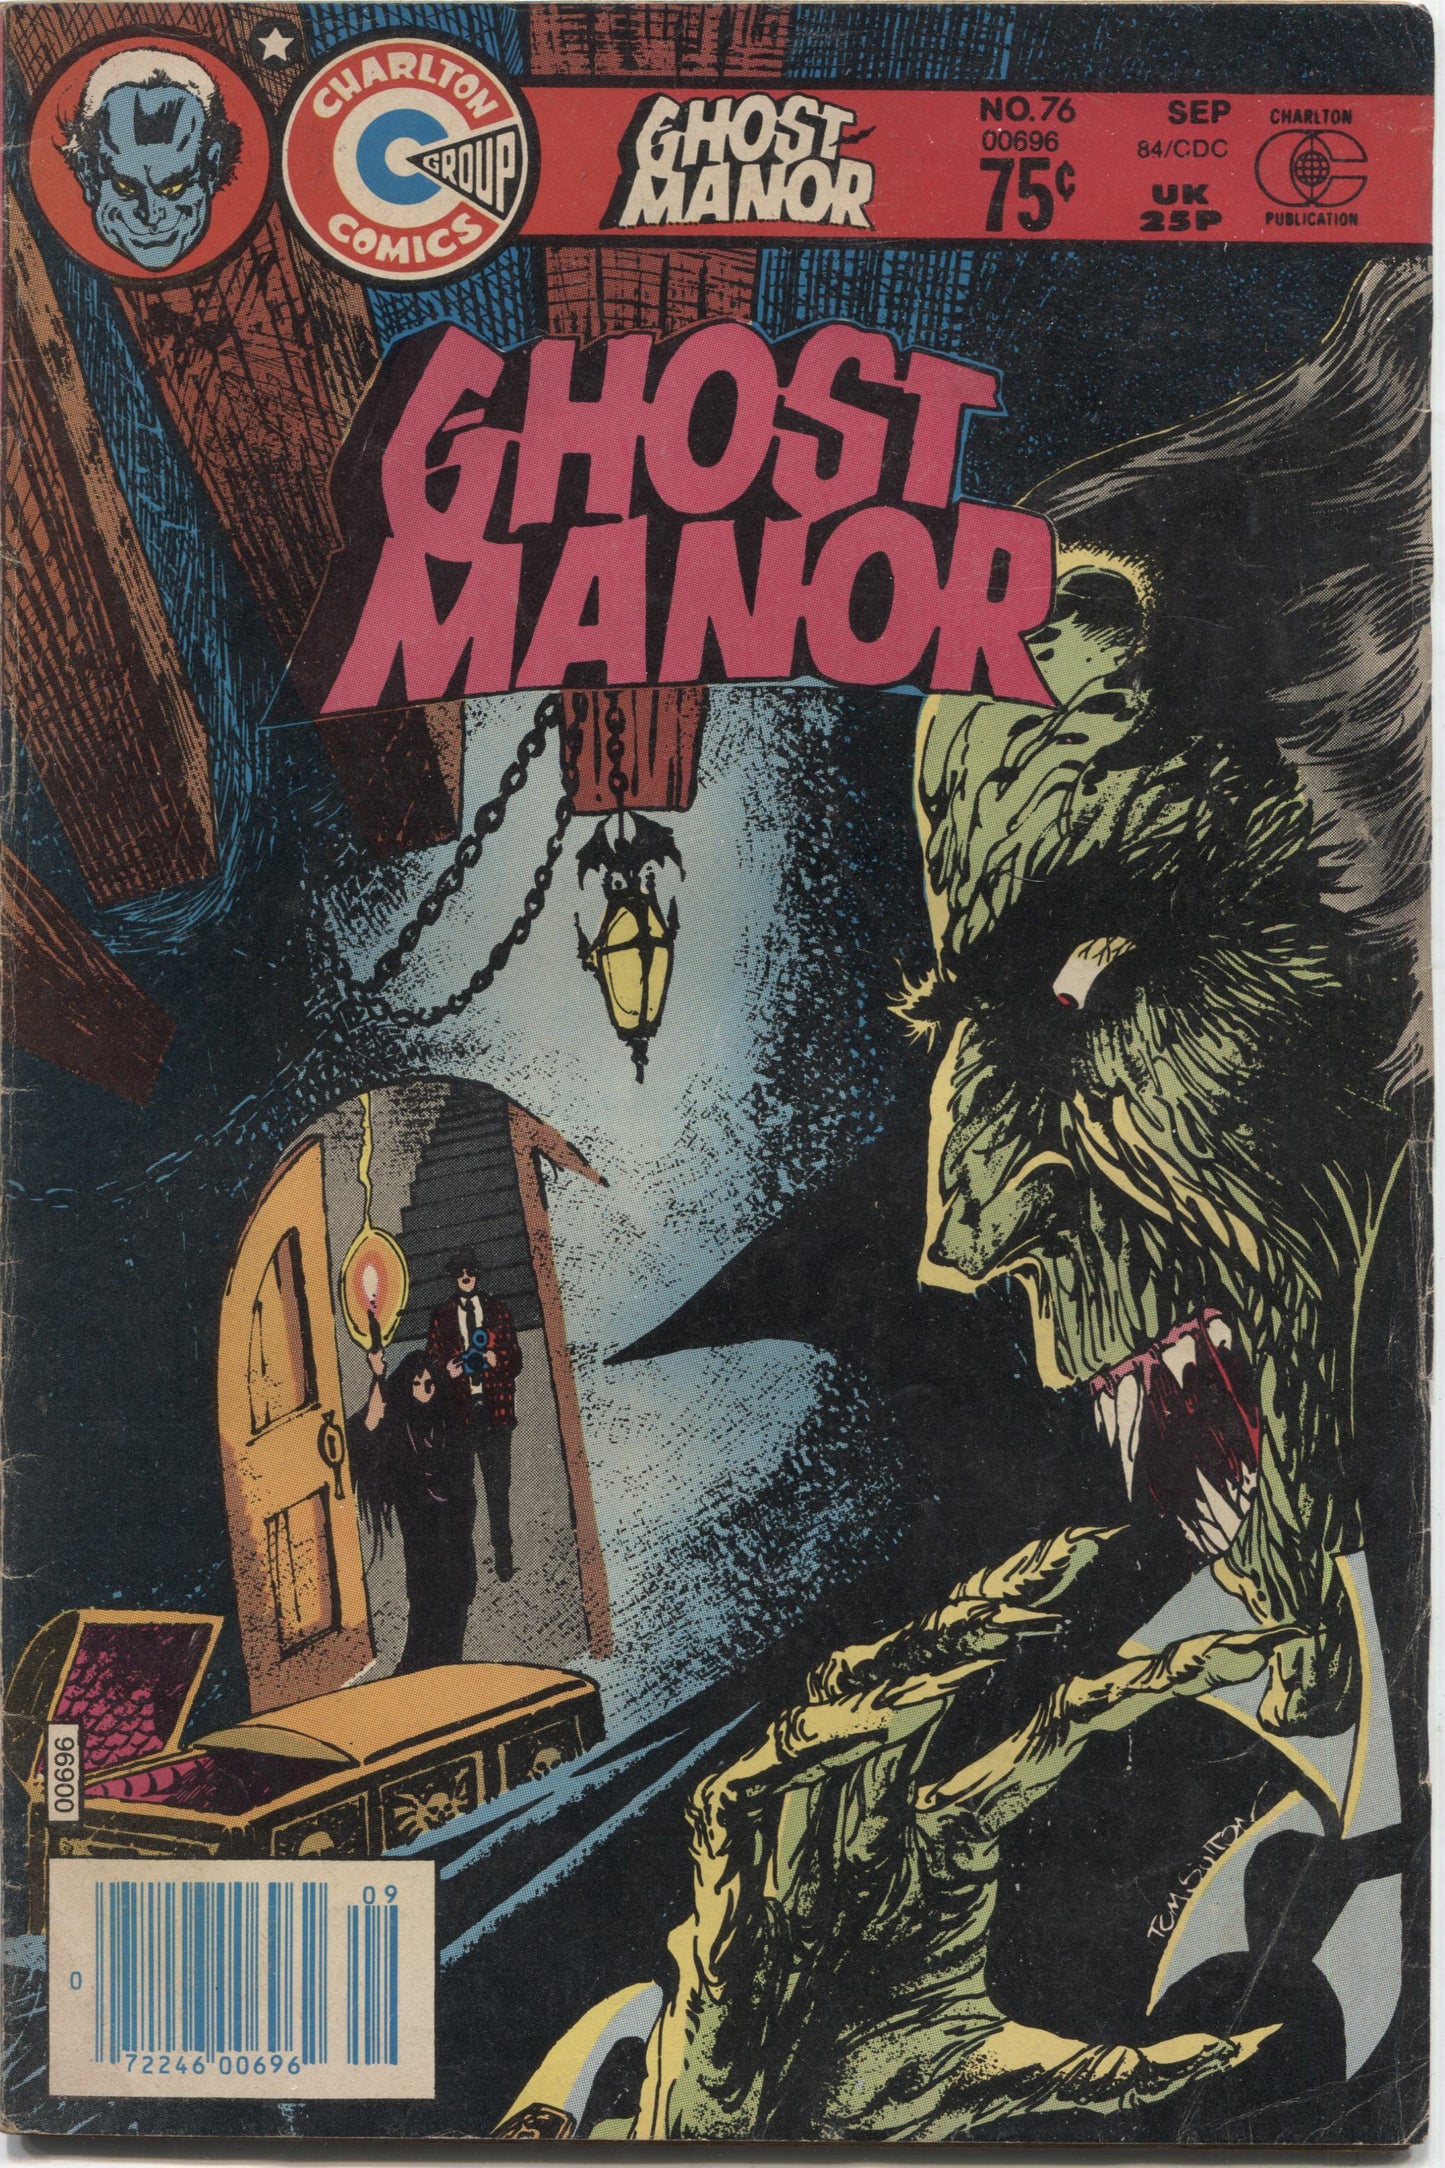 Ghost Manor No. 76, Charlton Comics, September 1984